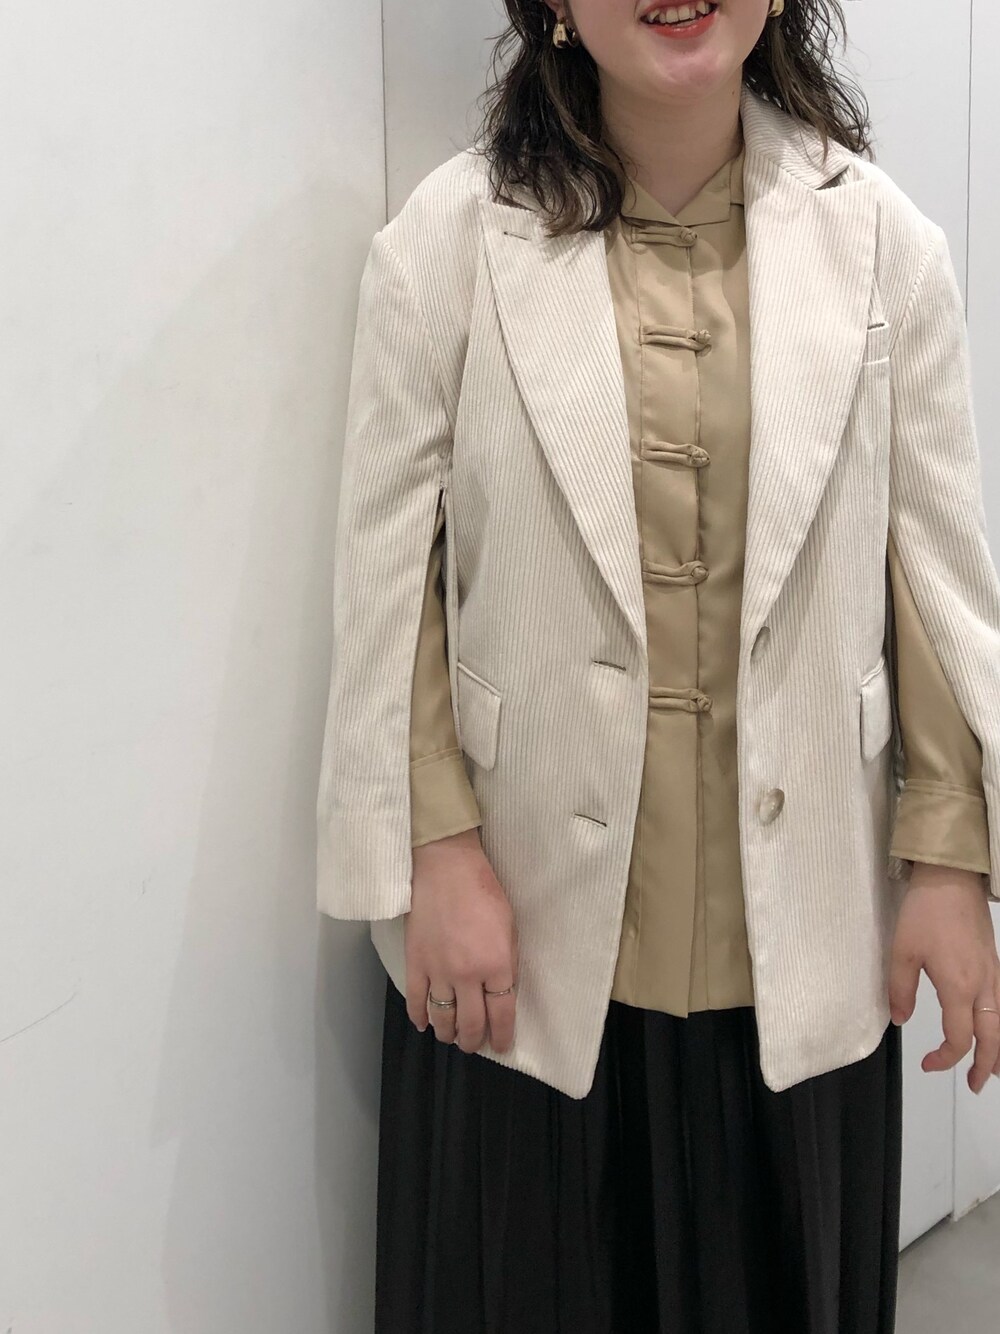 KAZUE KAWAMOTO｜PUBLIC TOKYOのテーラードジャケットを使った